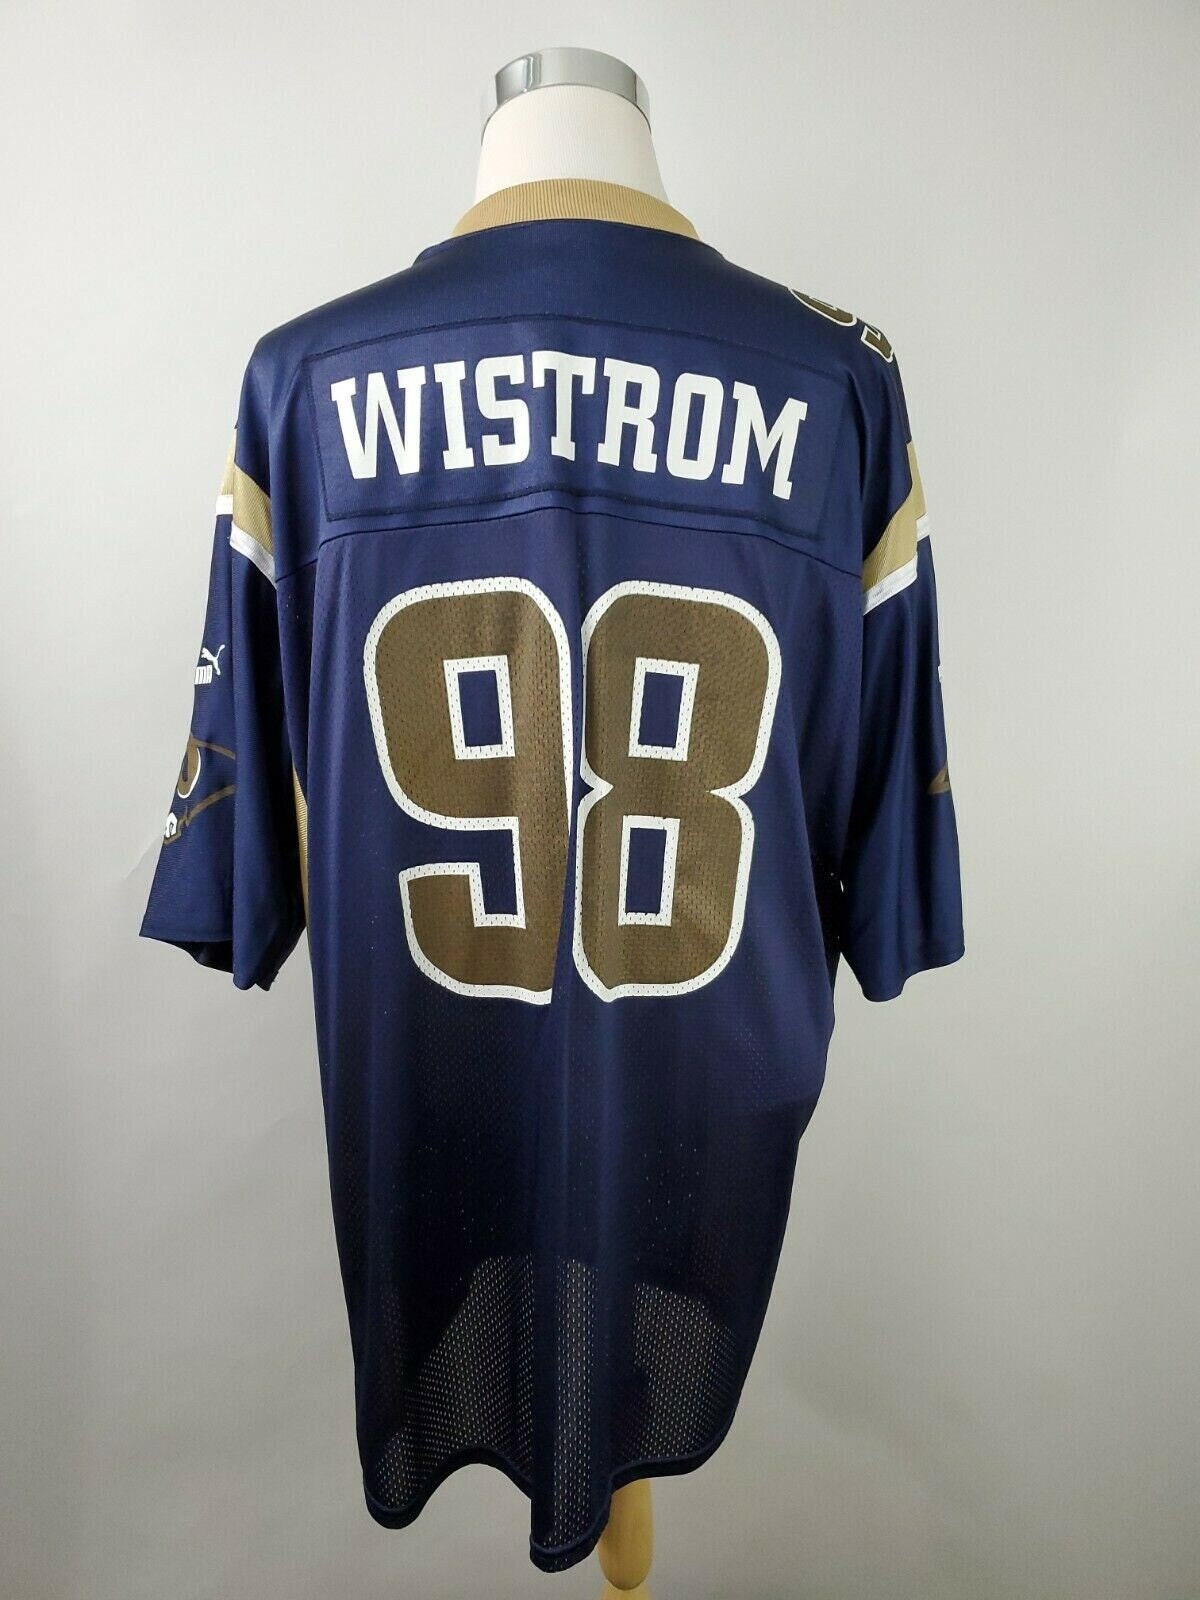 St. Louis Los Angeles Rams Grant Wistrom NFL Authentic Reebok Football Jersey Size Adult Medium